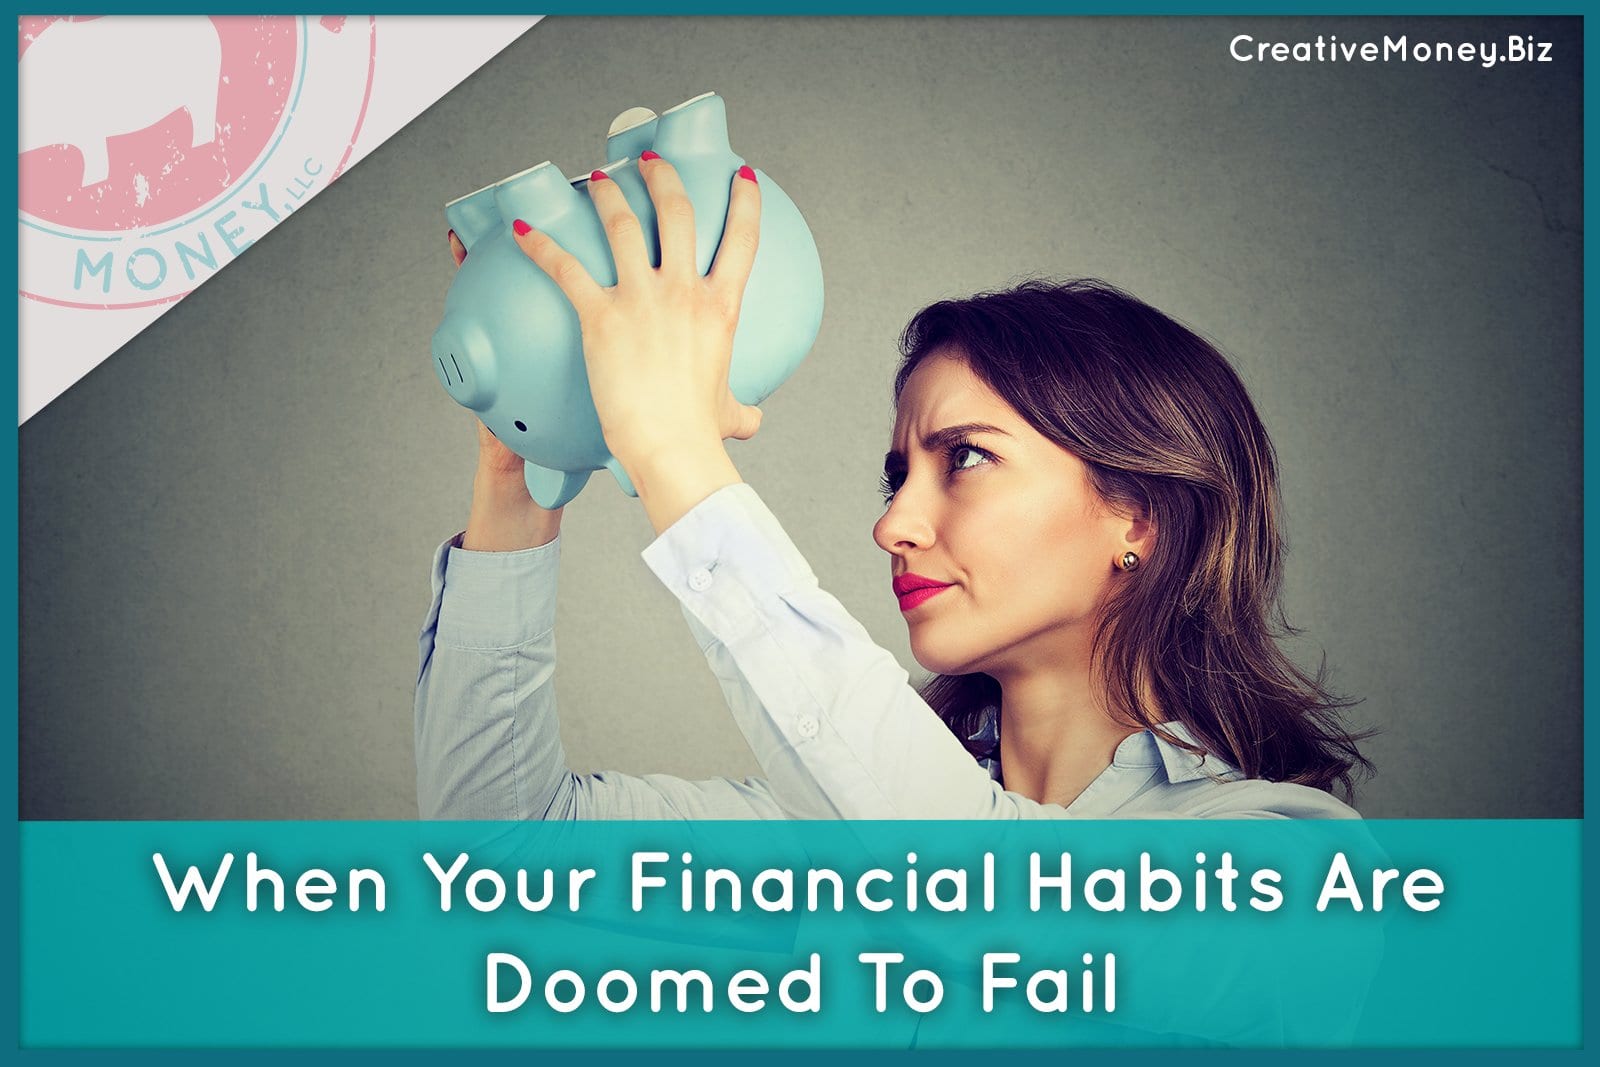 Financial habits